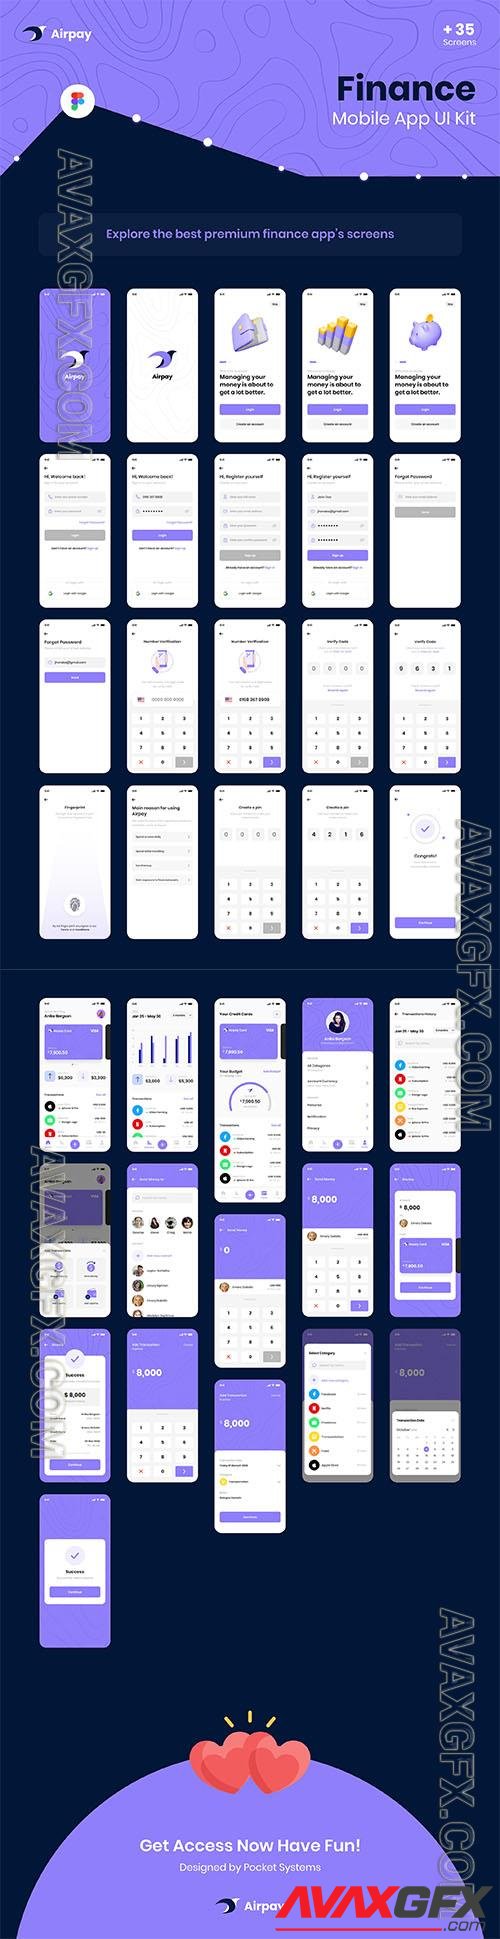 Airpay - Finance App UI Kit